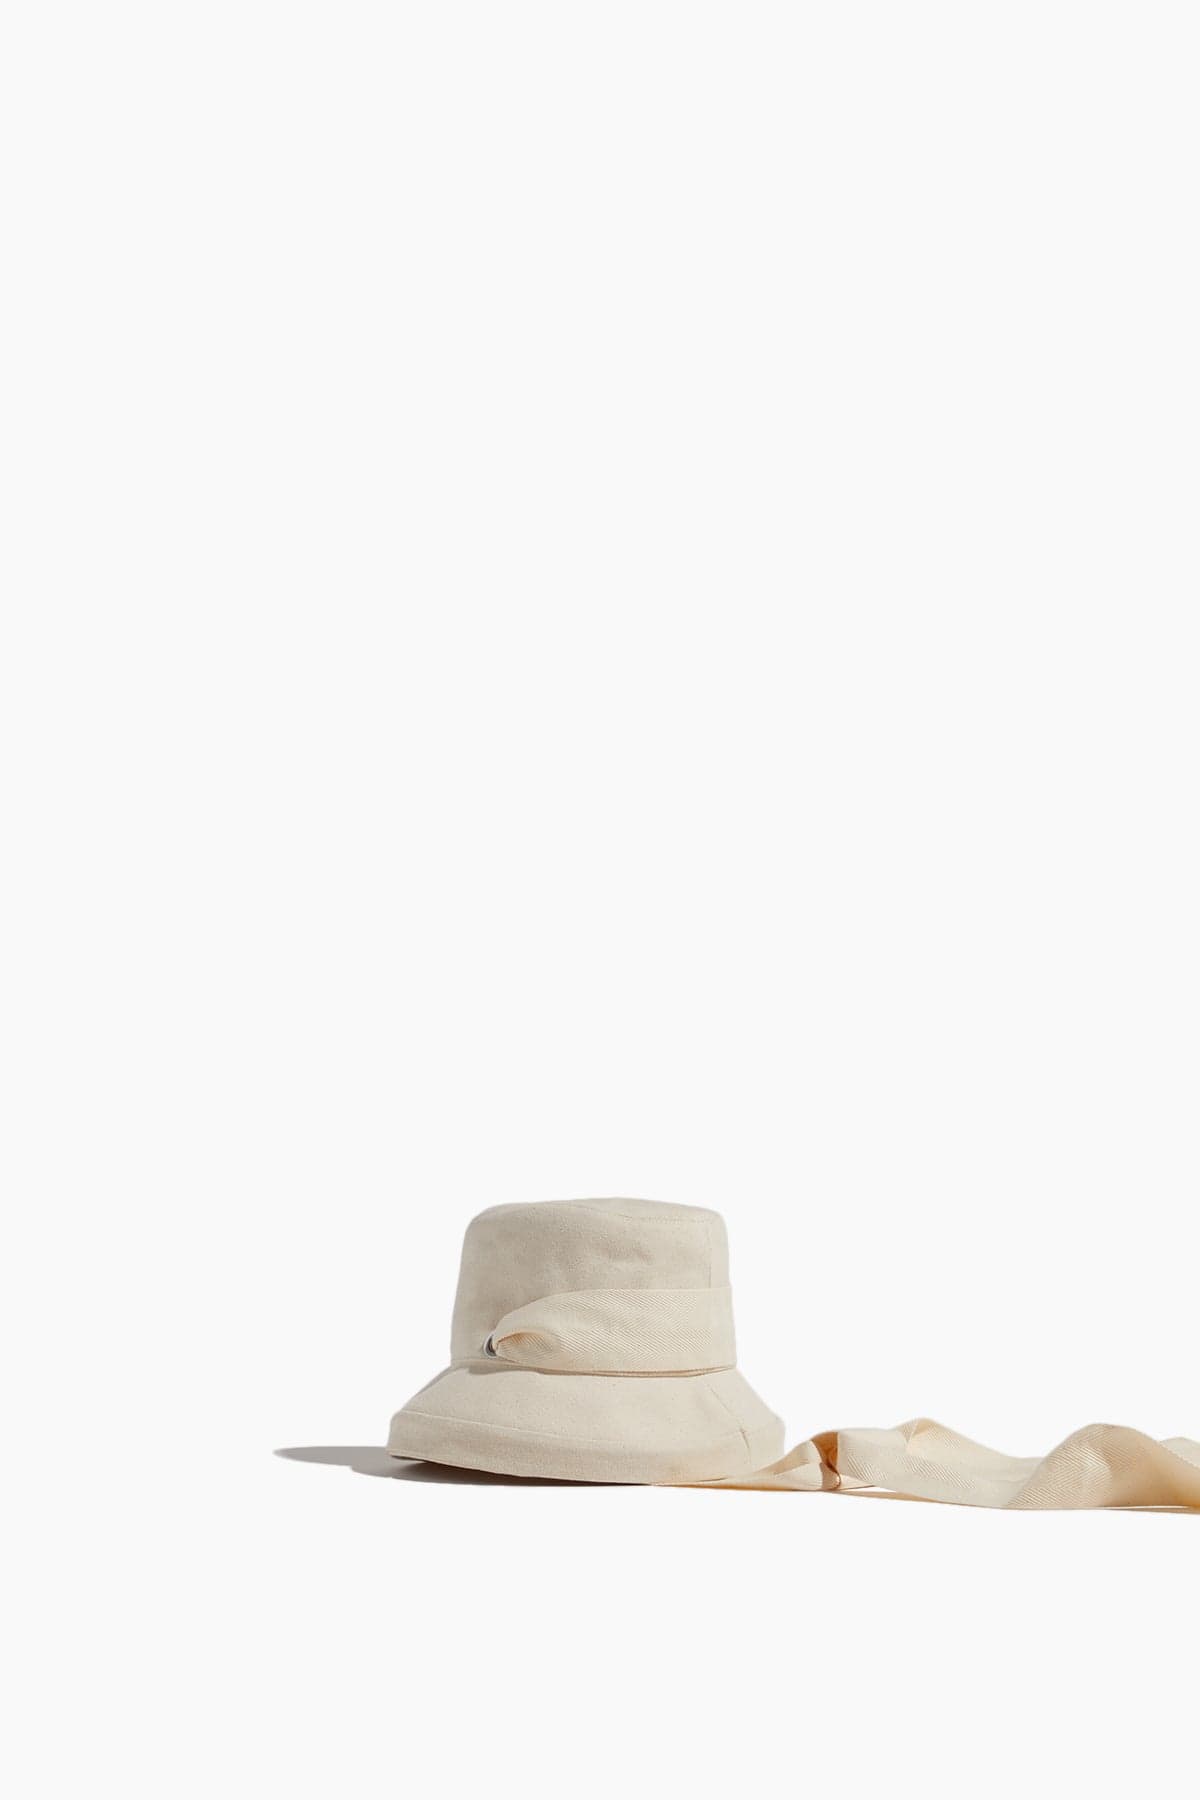 Gigi Burris Hats Leigh Anne Hat in Canvas Gigi Burris Leigh Anne Hat in Canvas